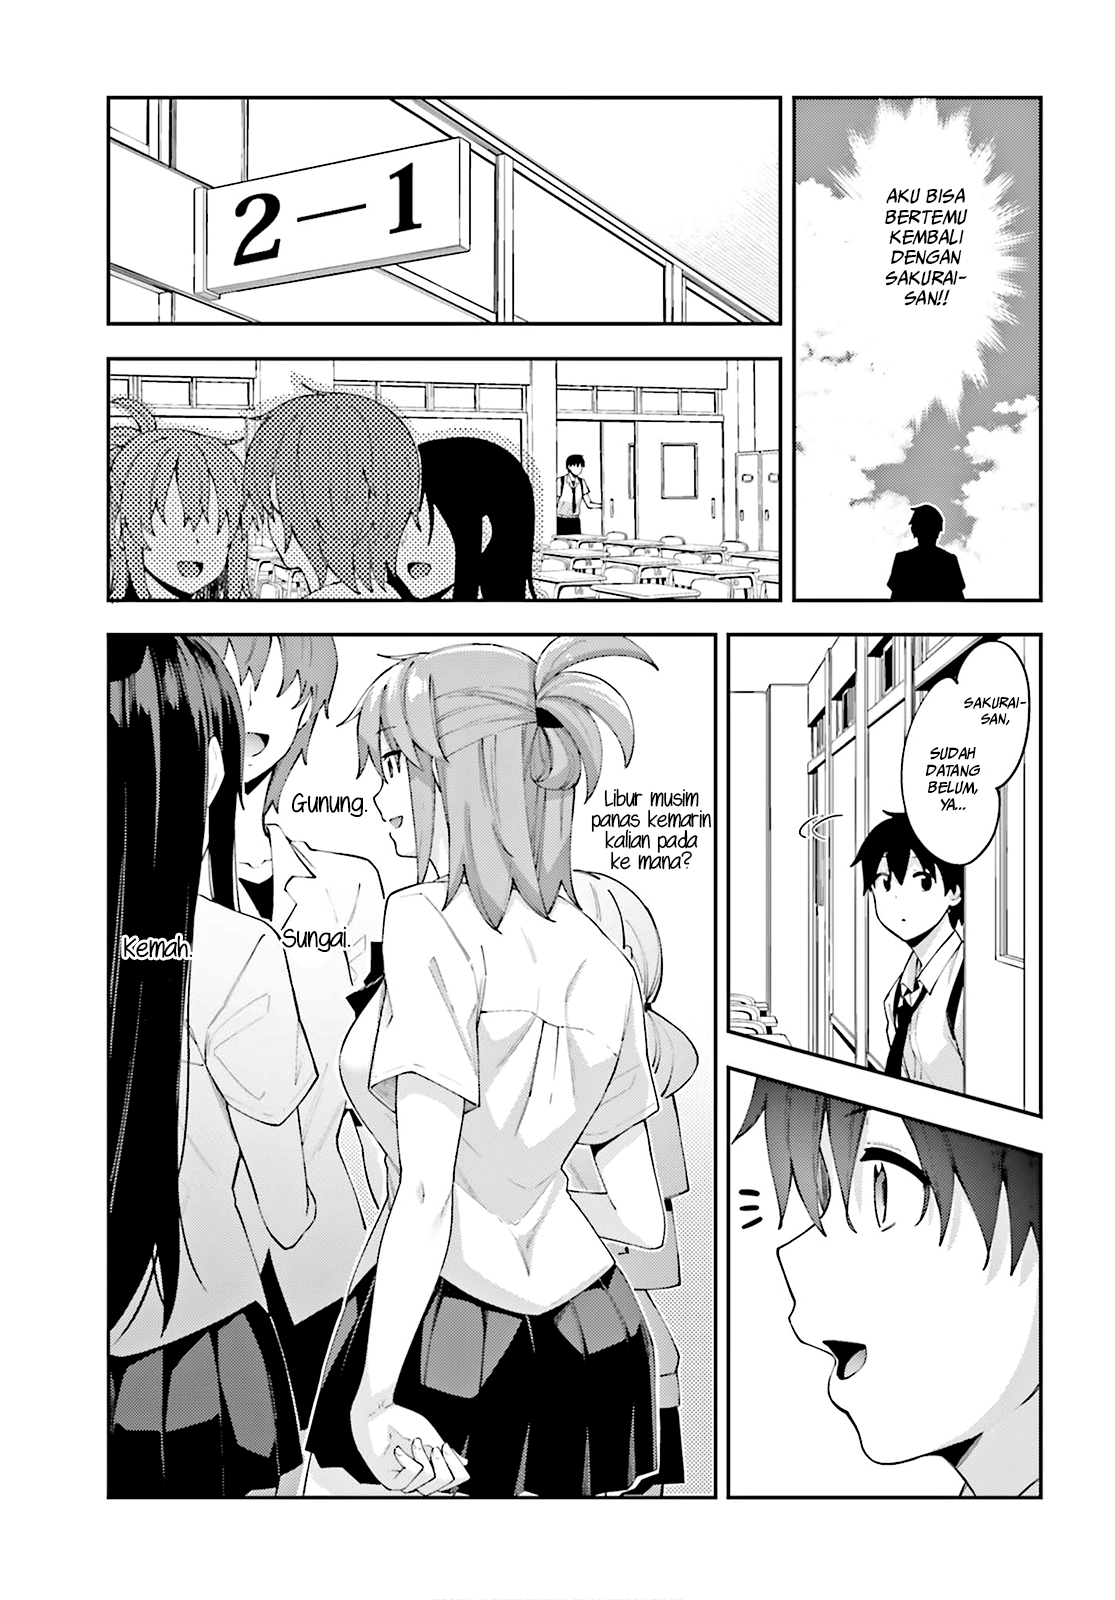 Sakurai-san Wants To Be Noticed Chapter 08